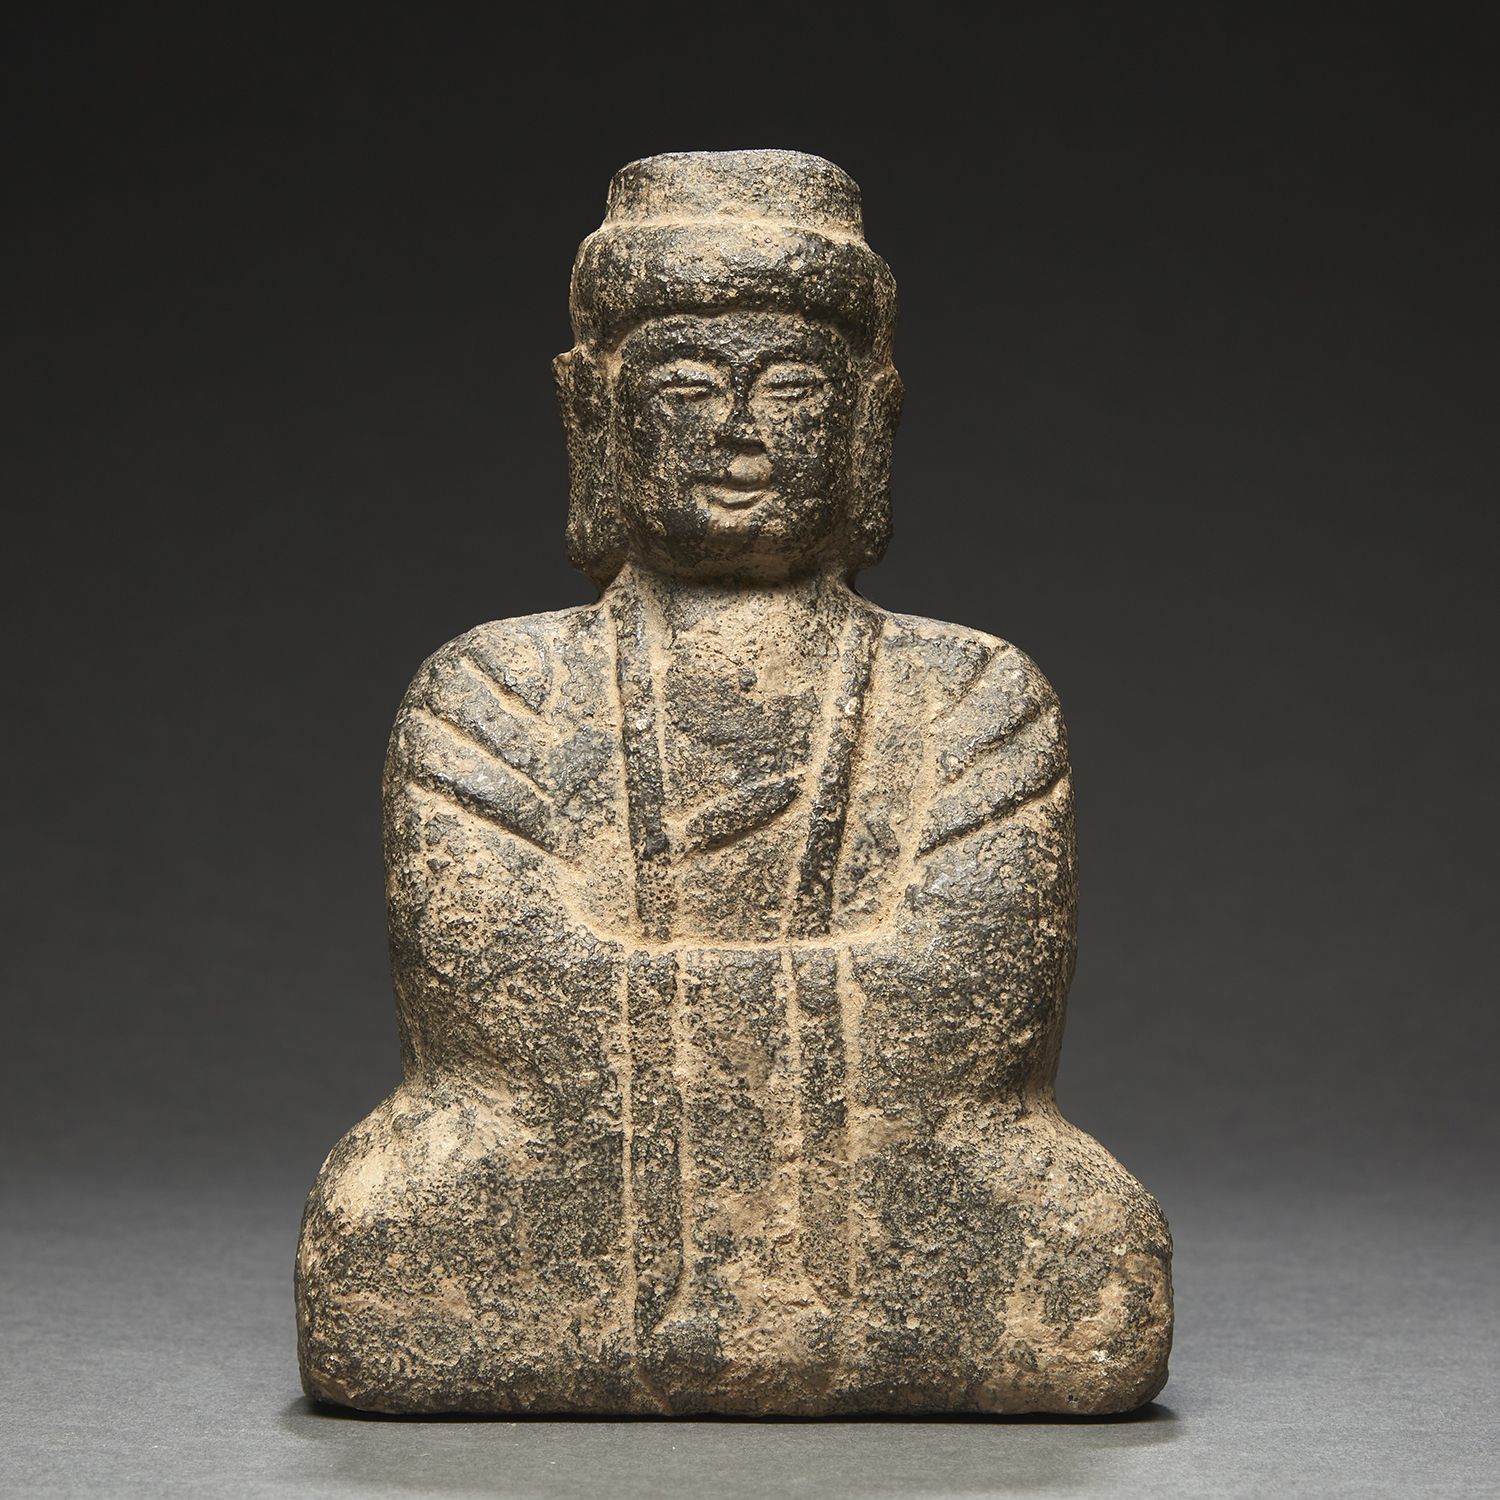 Null STATUA in pietra
, marrone-nera, raffigurante Buddha seduto in meditazione,&hellip;